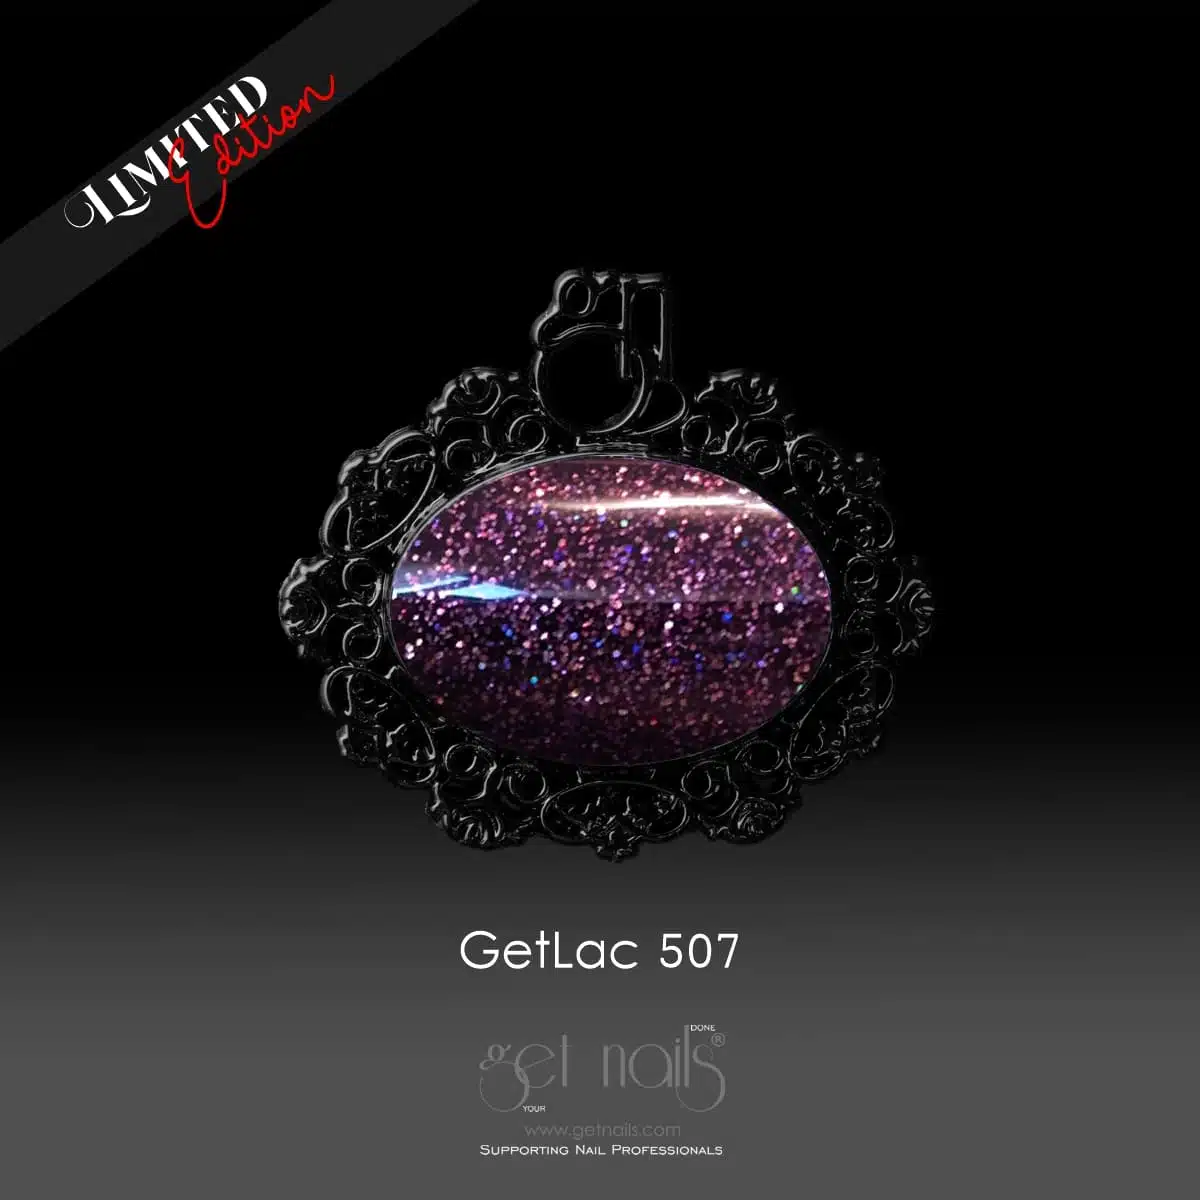 Get Nails Austria - GetLac 507 15g